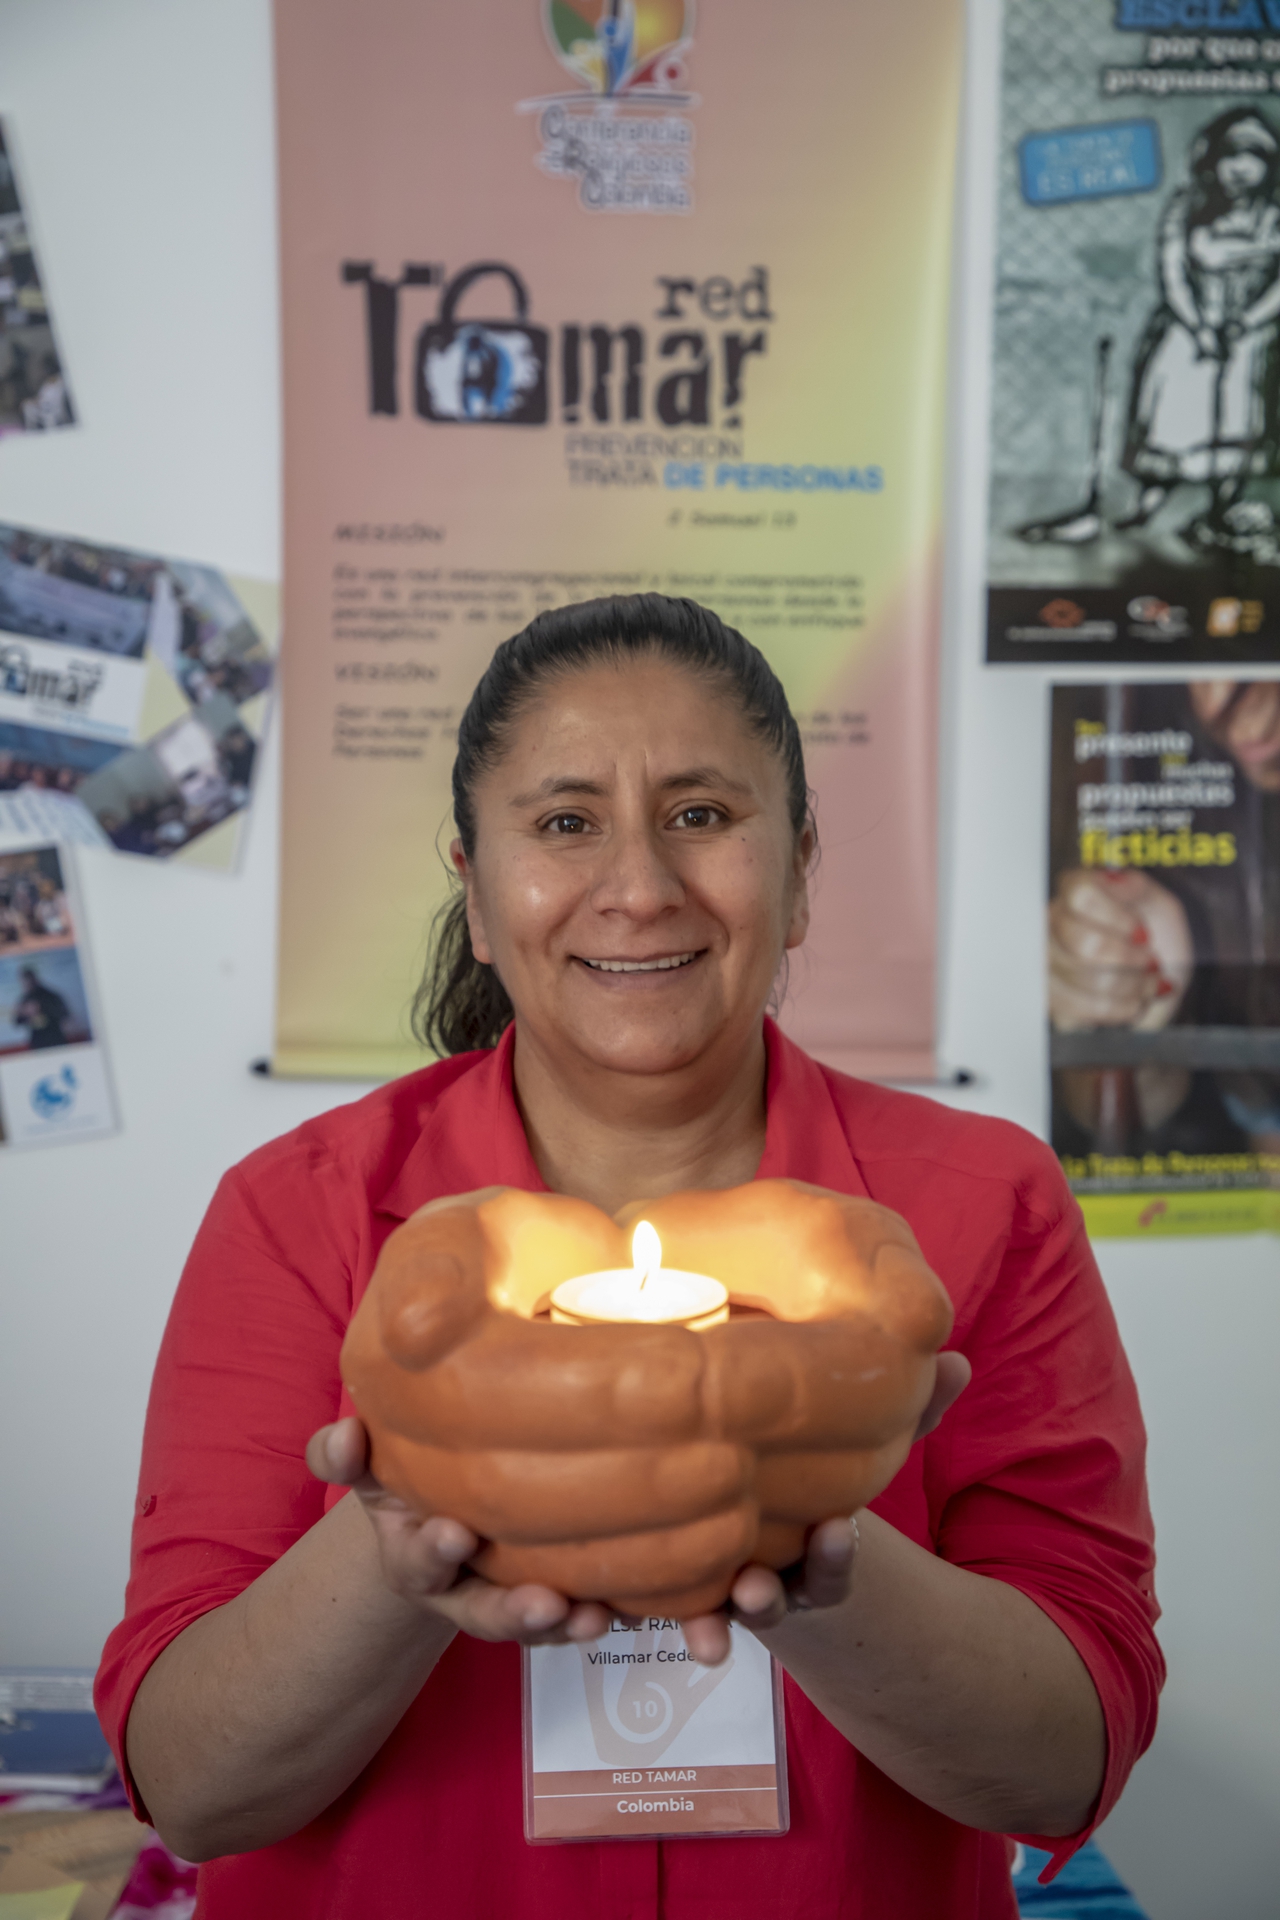 Testimony of Sr. Ilse Villamar Cedeño, Coordinator of Red Tamar – Colombia